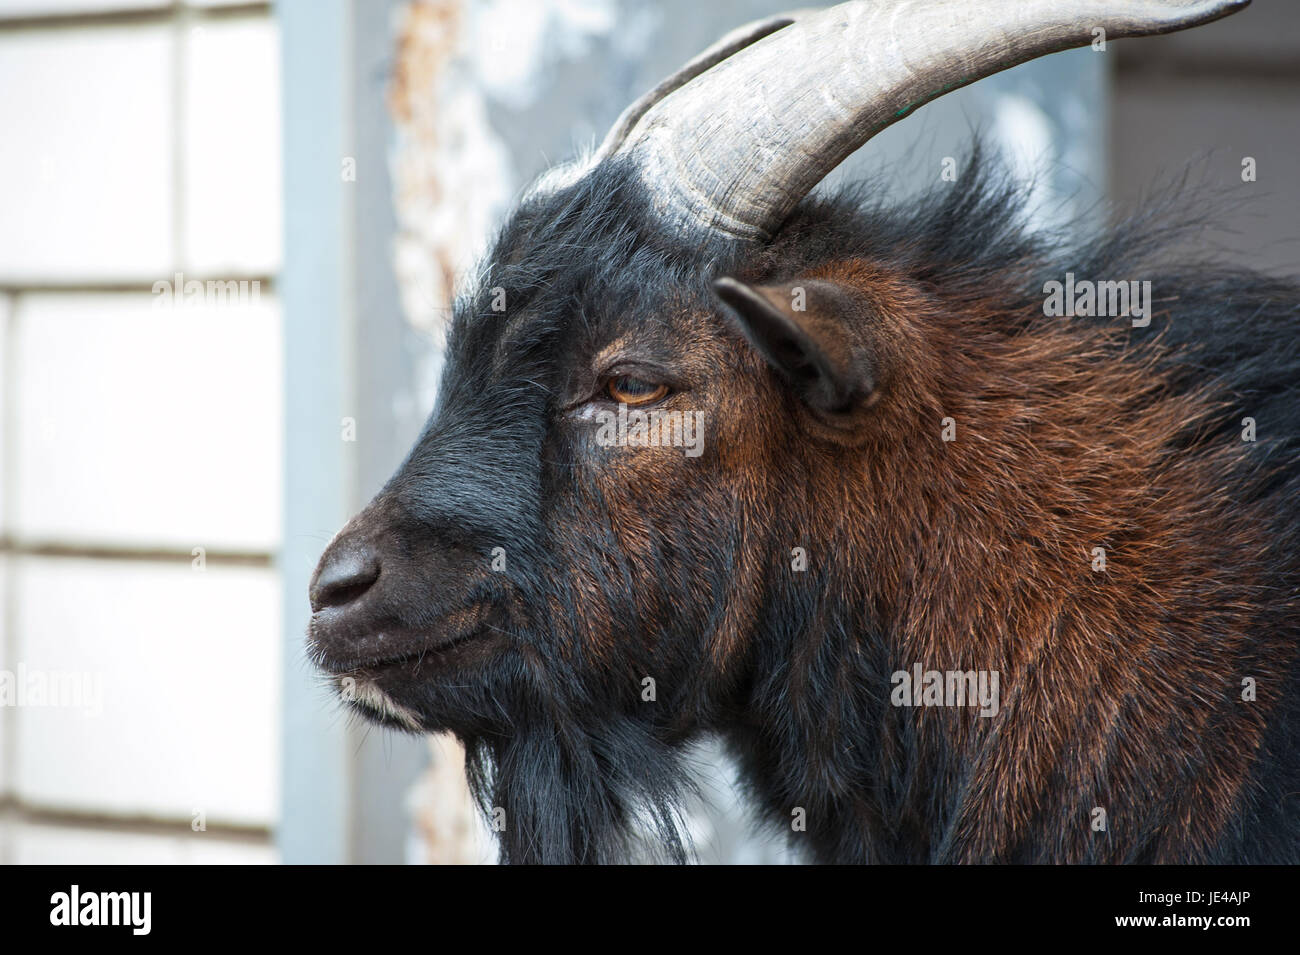 Sheep ram with large horns closeup portrait Stock Photo